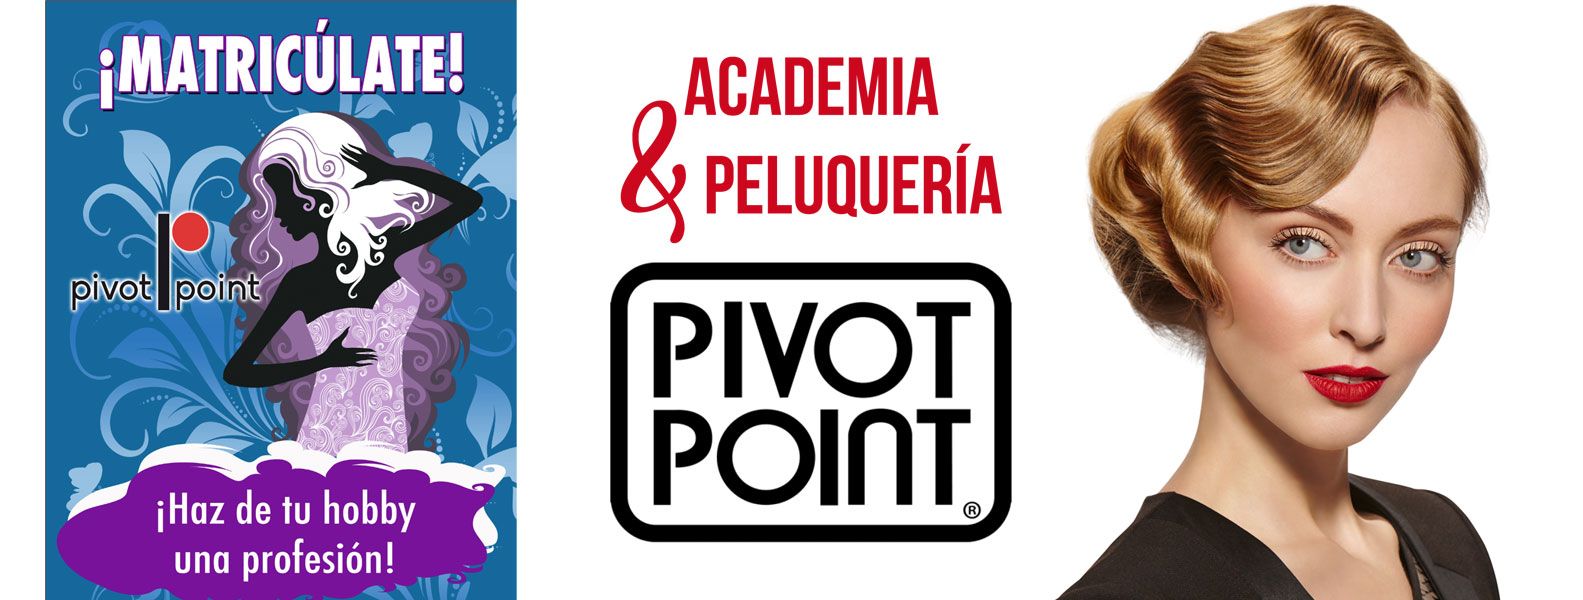 Academia Pivot Point banner